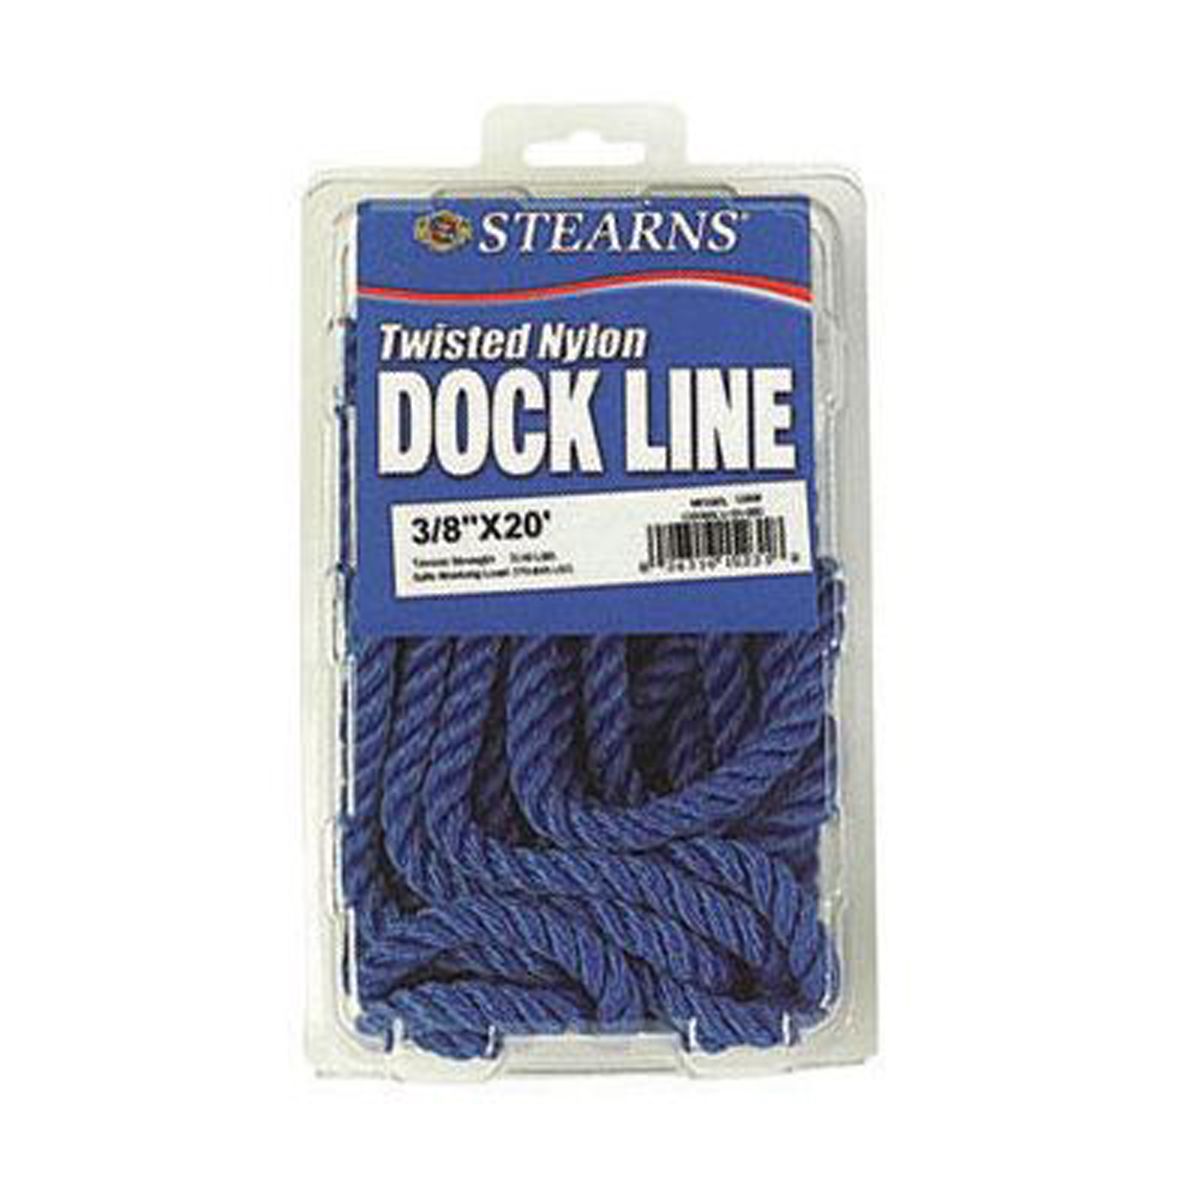 3/8" 20' Twisted Nylon Dock Line